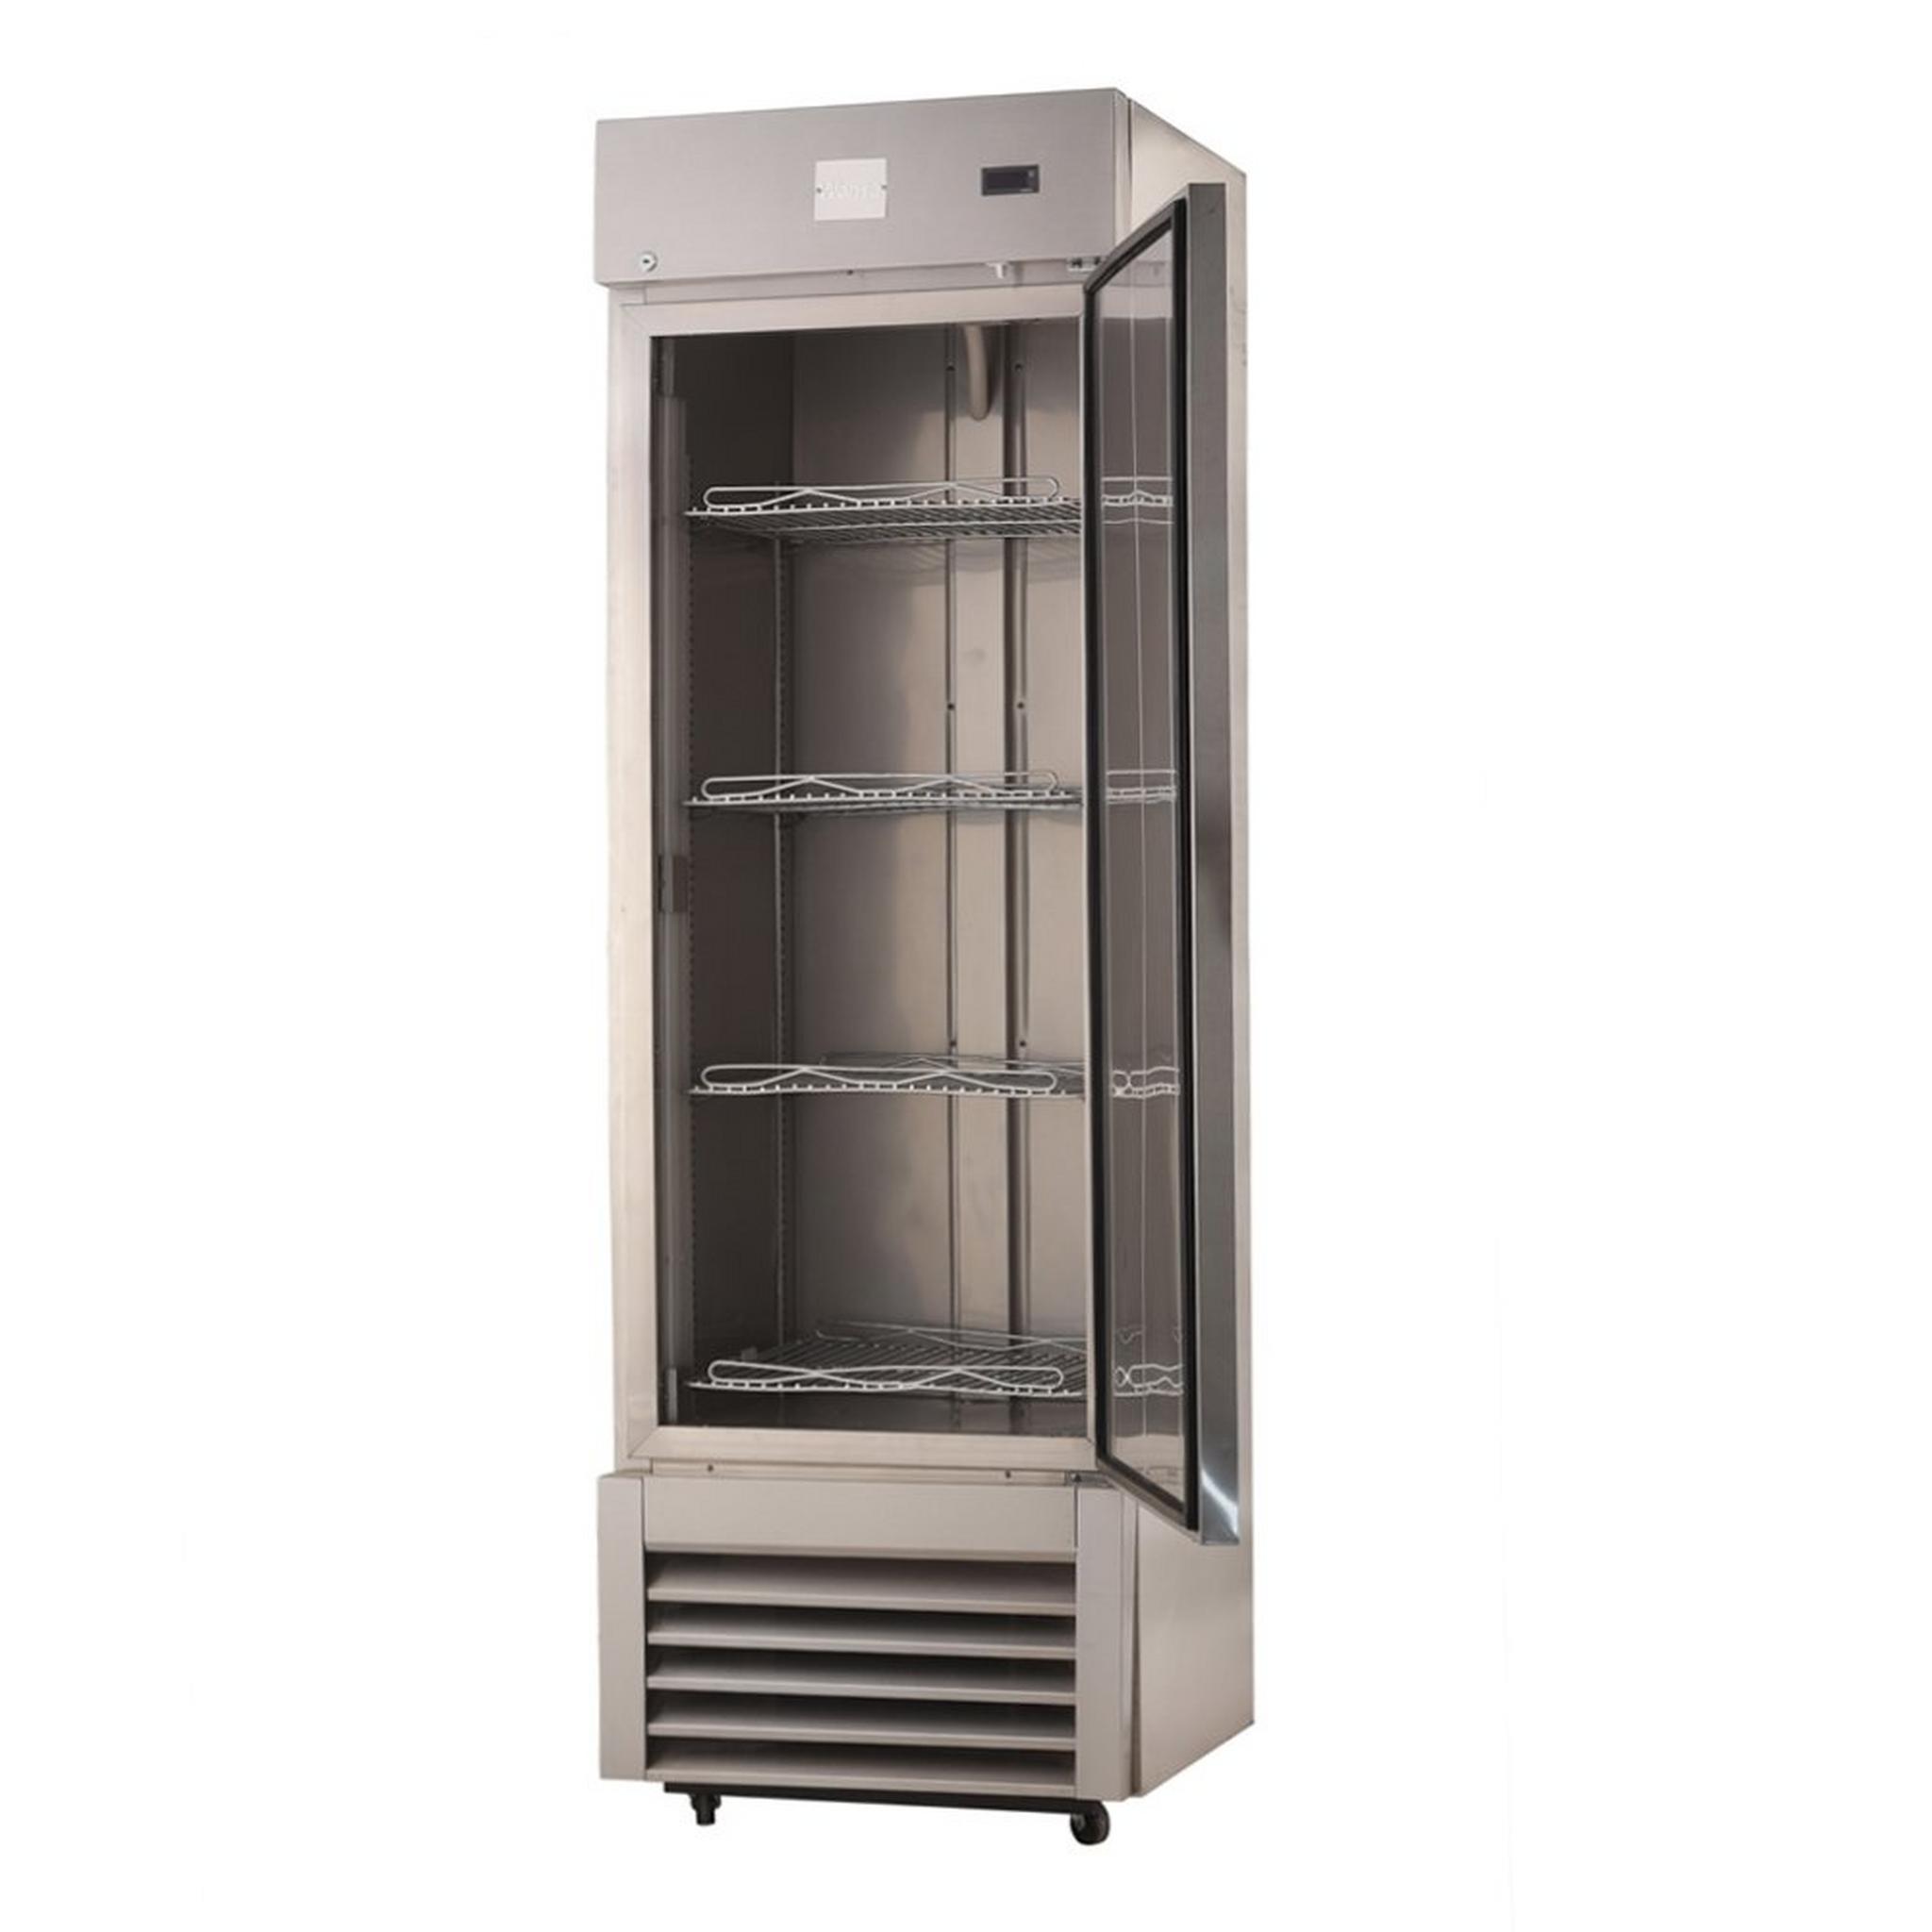 Wansa 14 Cft. Single Door  Refrigerator - Stainless Steel (1DAS)